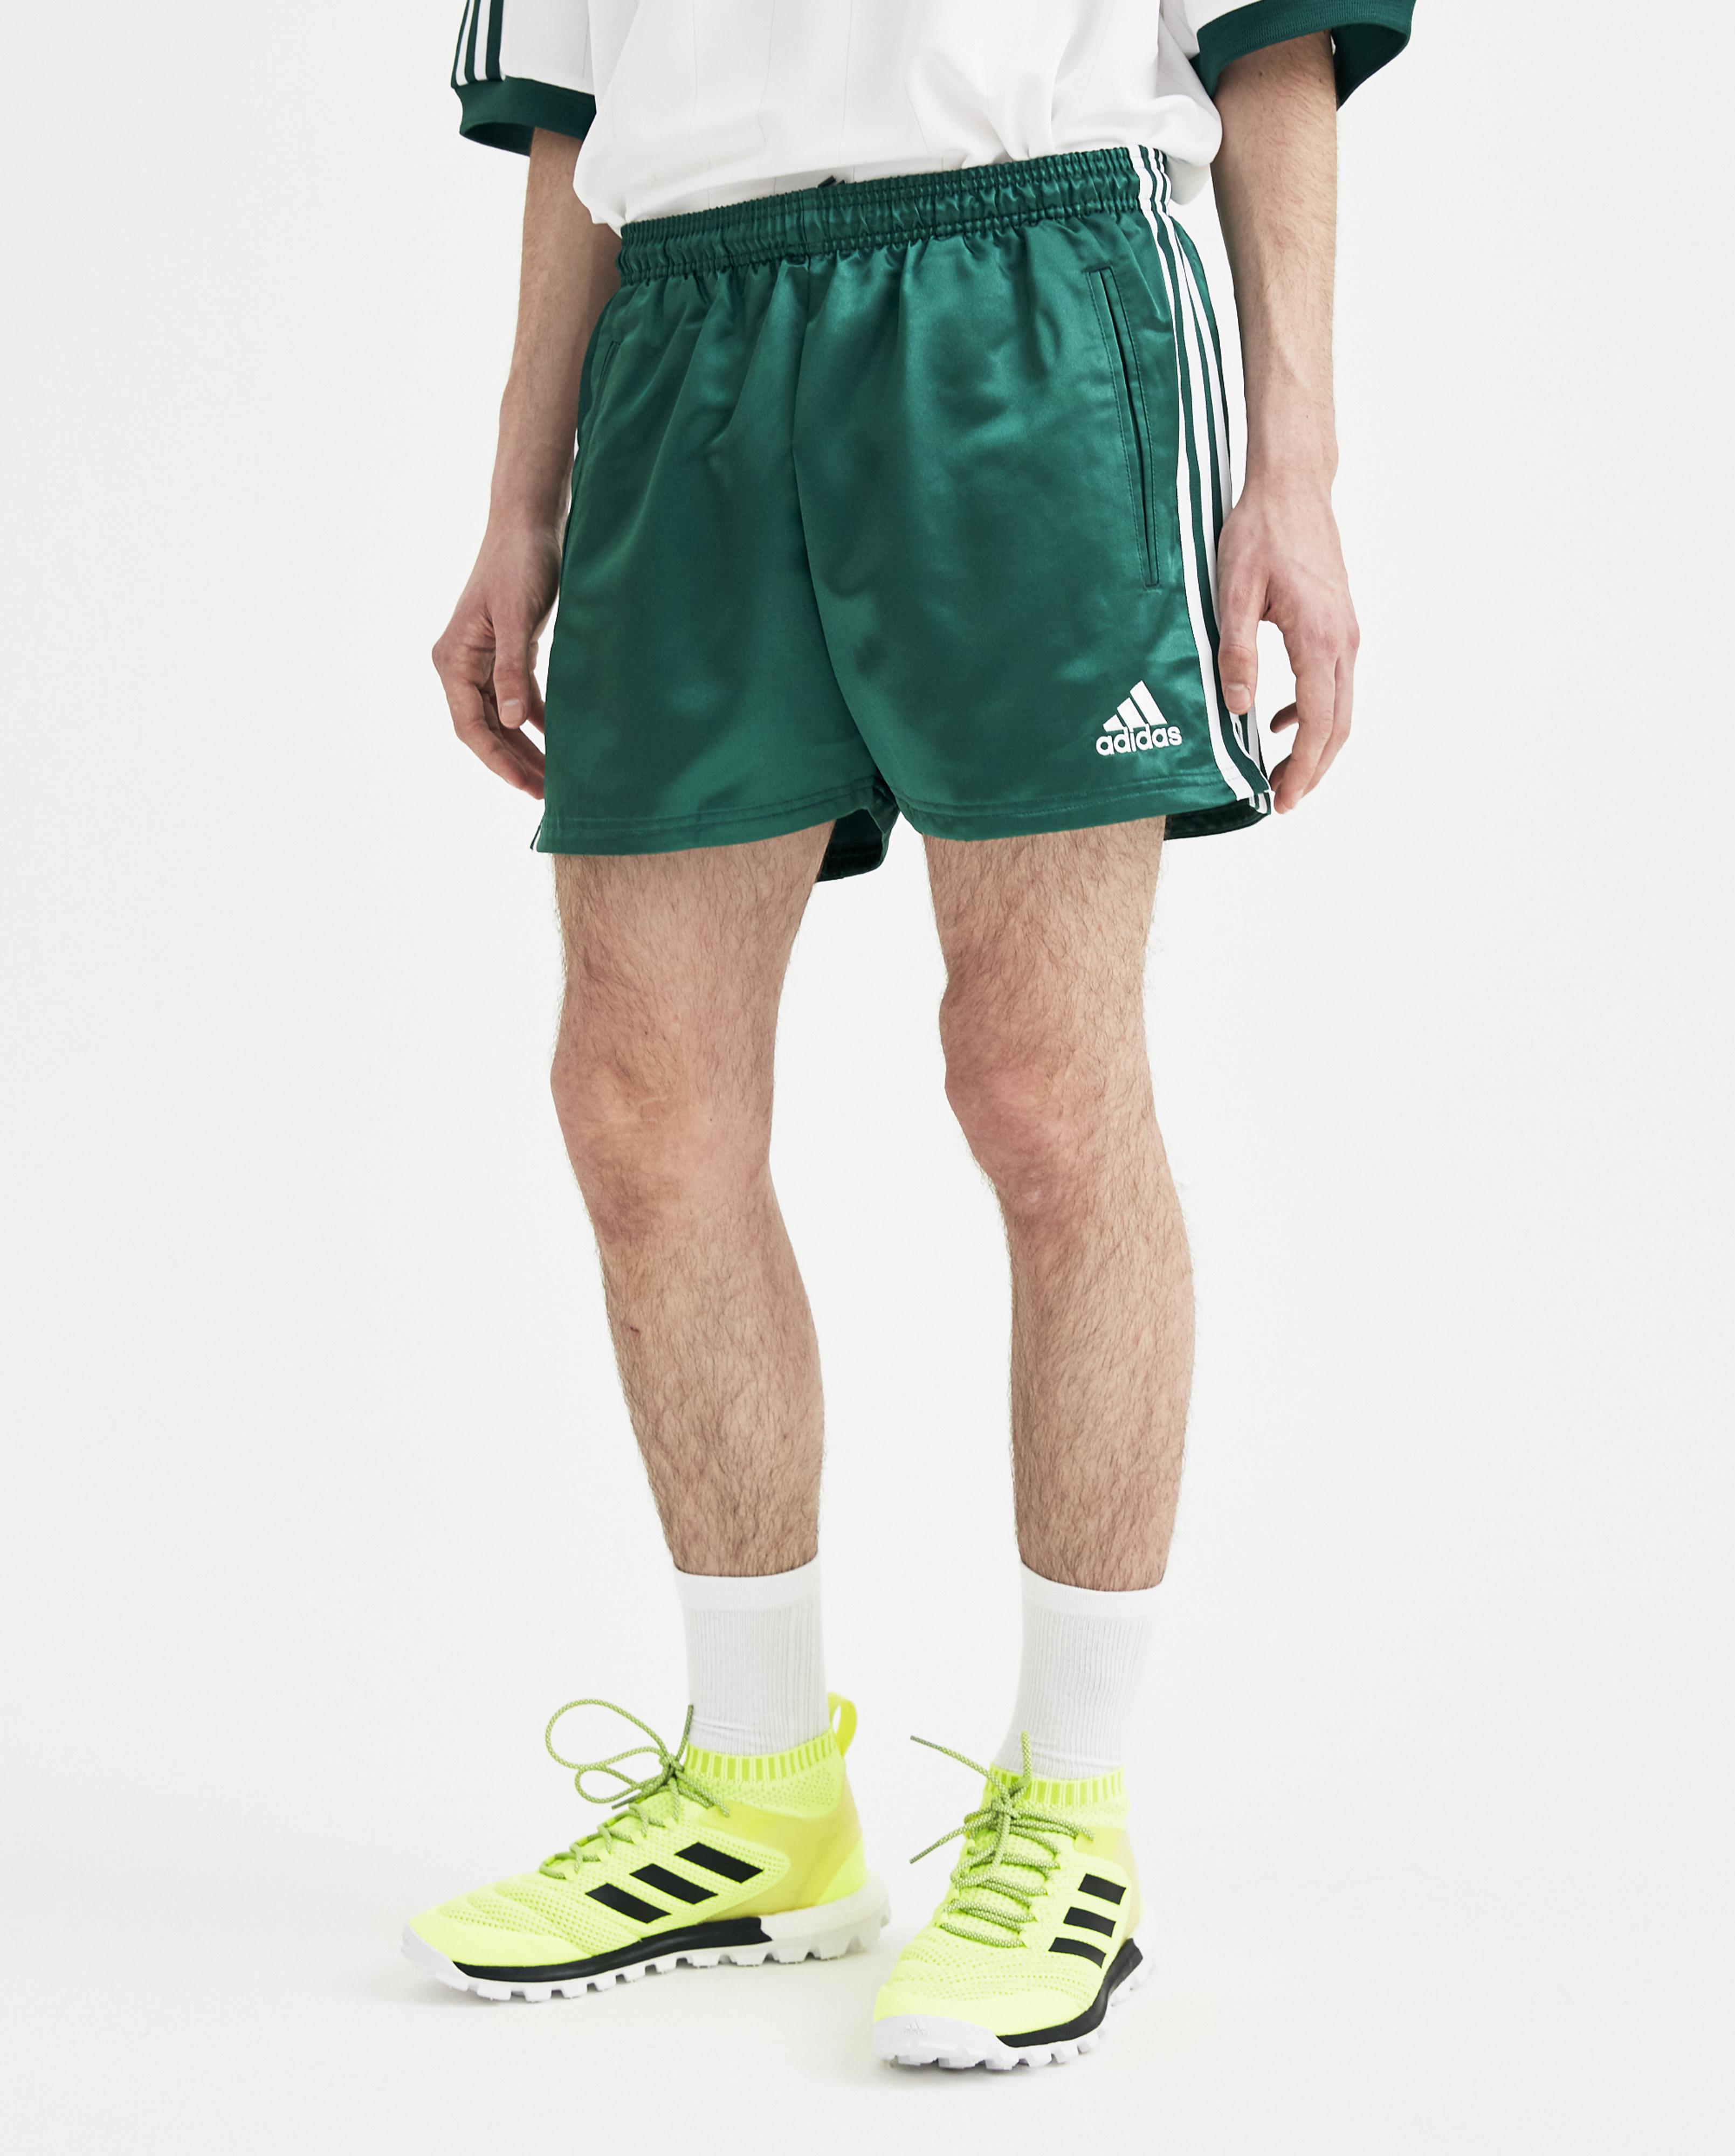 Dark Green Shorts Mens | vlr.eng.br